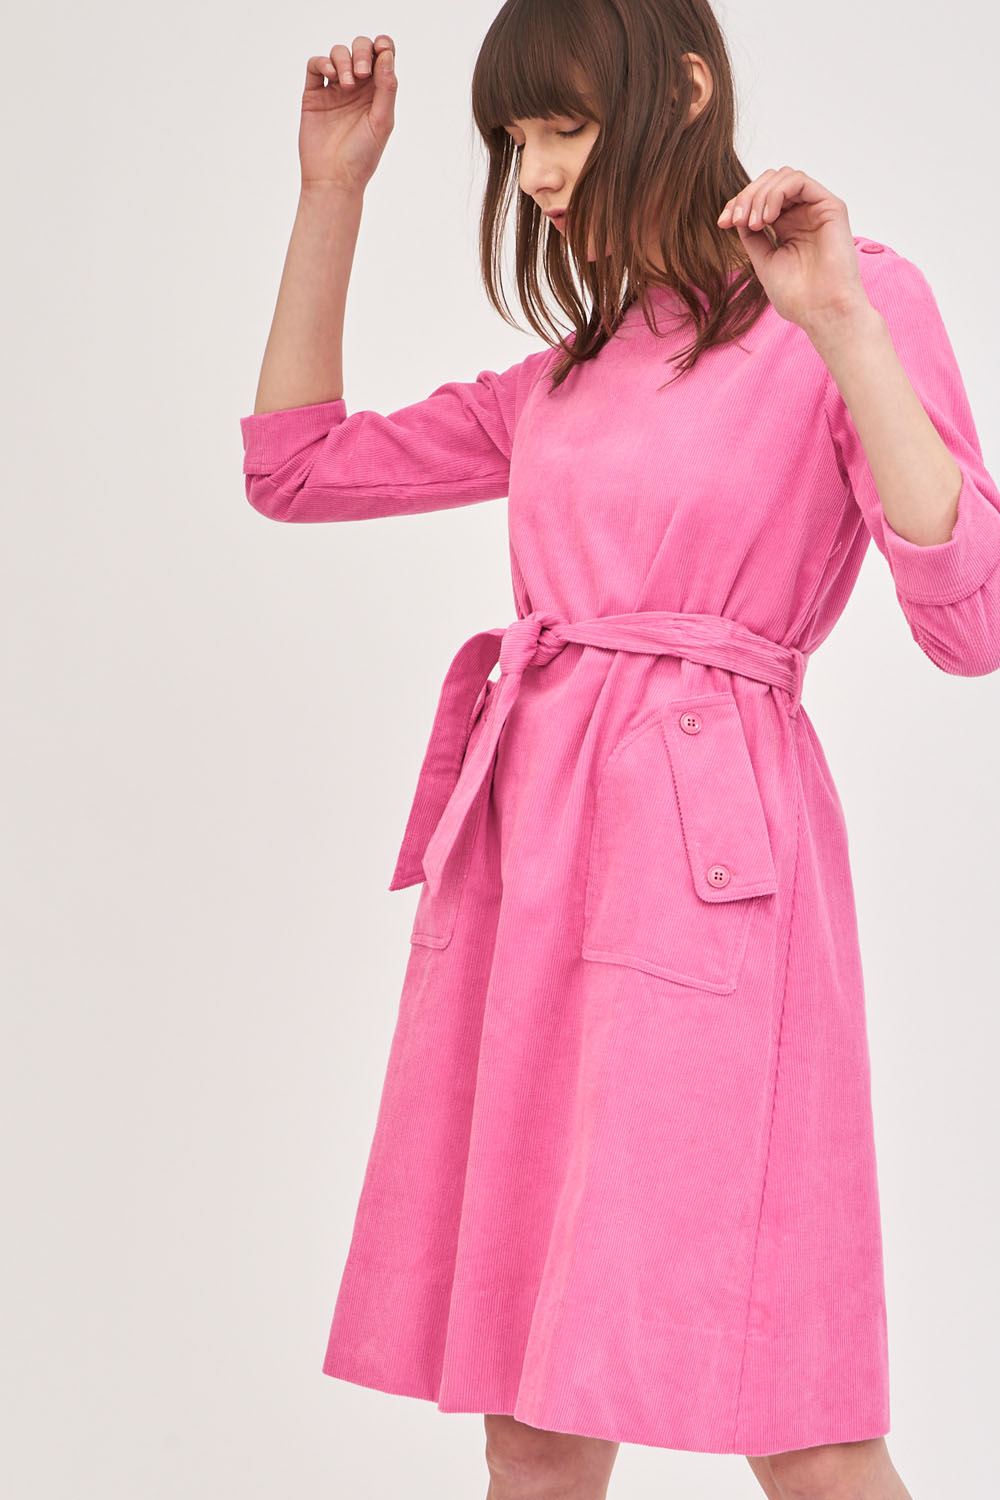 pink corduroy dress